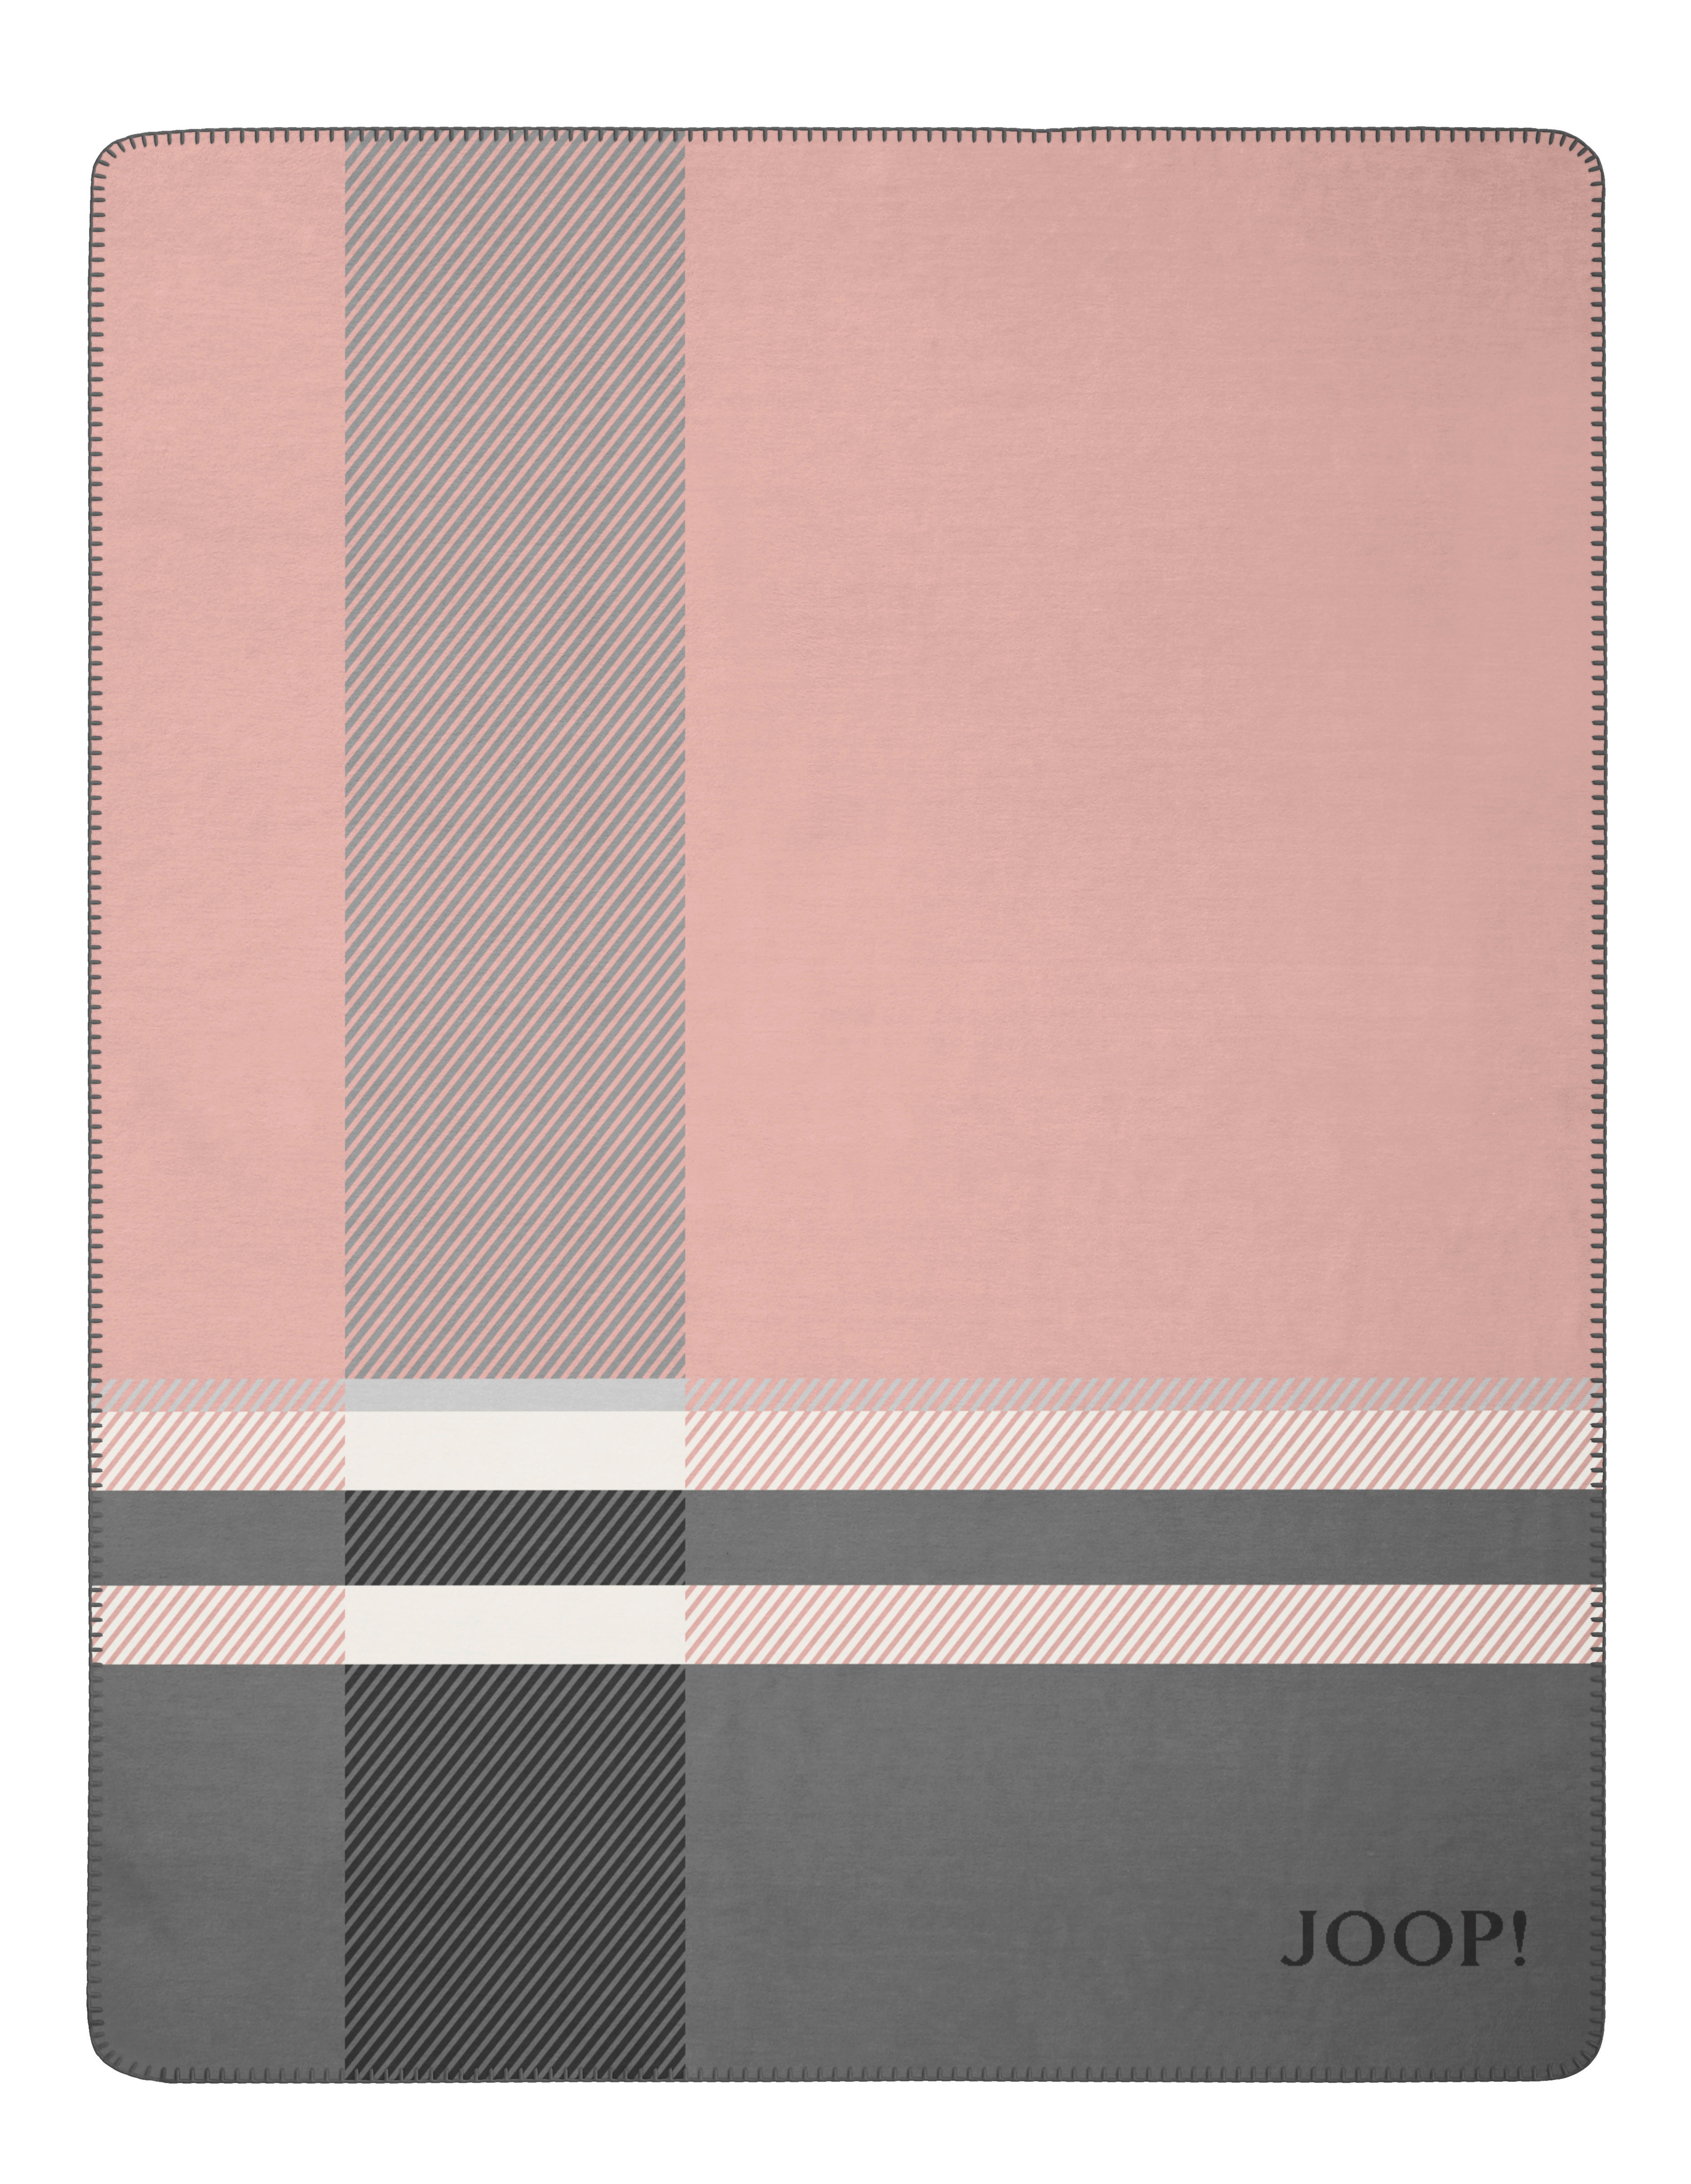 ĆEBE 150/200 cm  - tamnosiva/ružičasta, Dizajnerski, tekstil (150/200cm) - Joop!